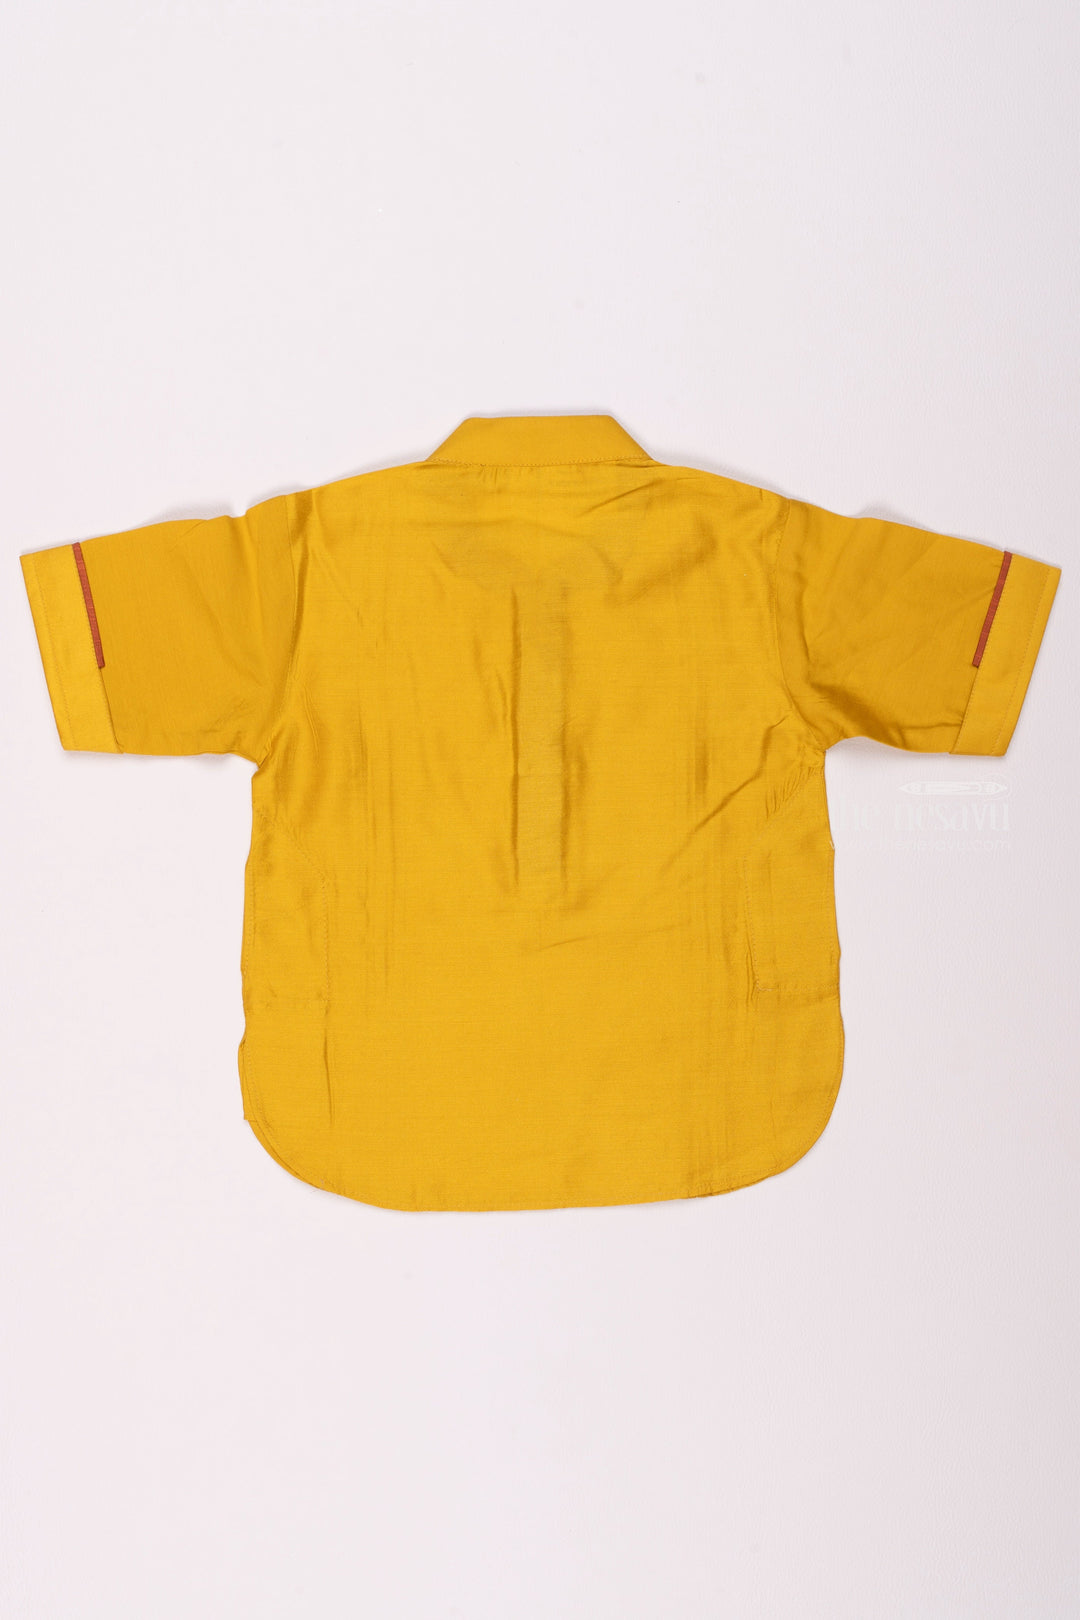 The Nesavu Boys Kurtha Shirt Matching Daddy and Son Shirts - Sunshine Bloom Vibrant Yellow Boys Shirt with Floral Embroidery Nesavu Cute Sibling Kurta Shirts | Trendy Designs for Brothers Combo Shirt | The Nesavu